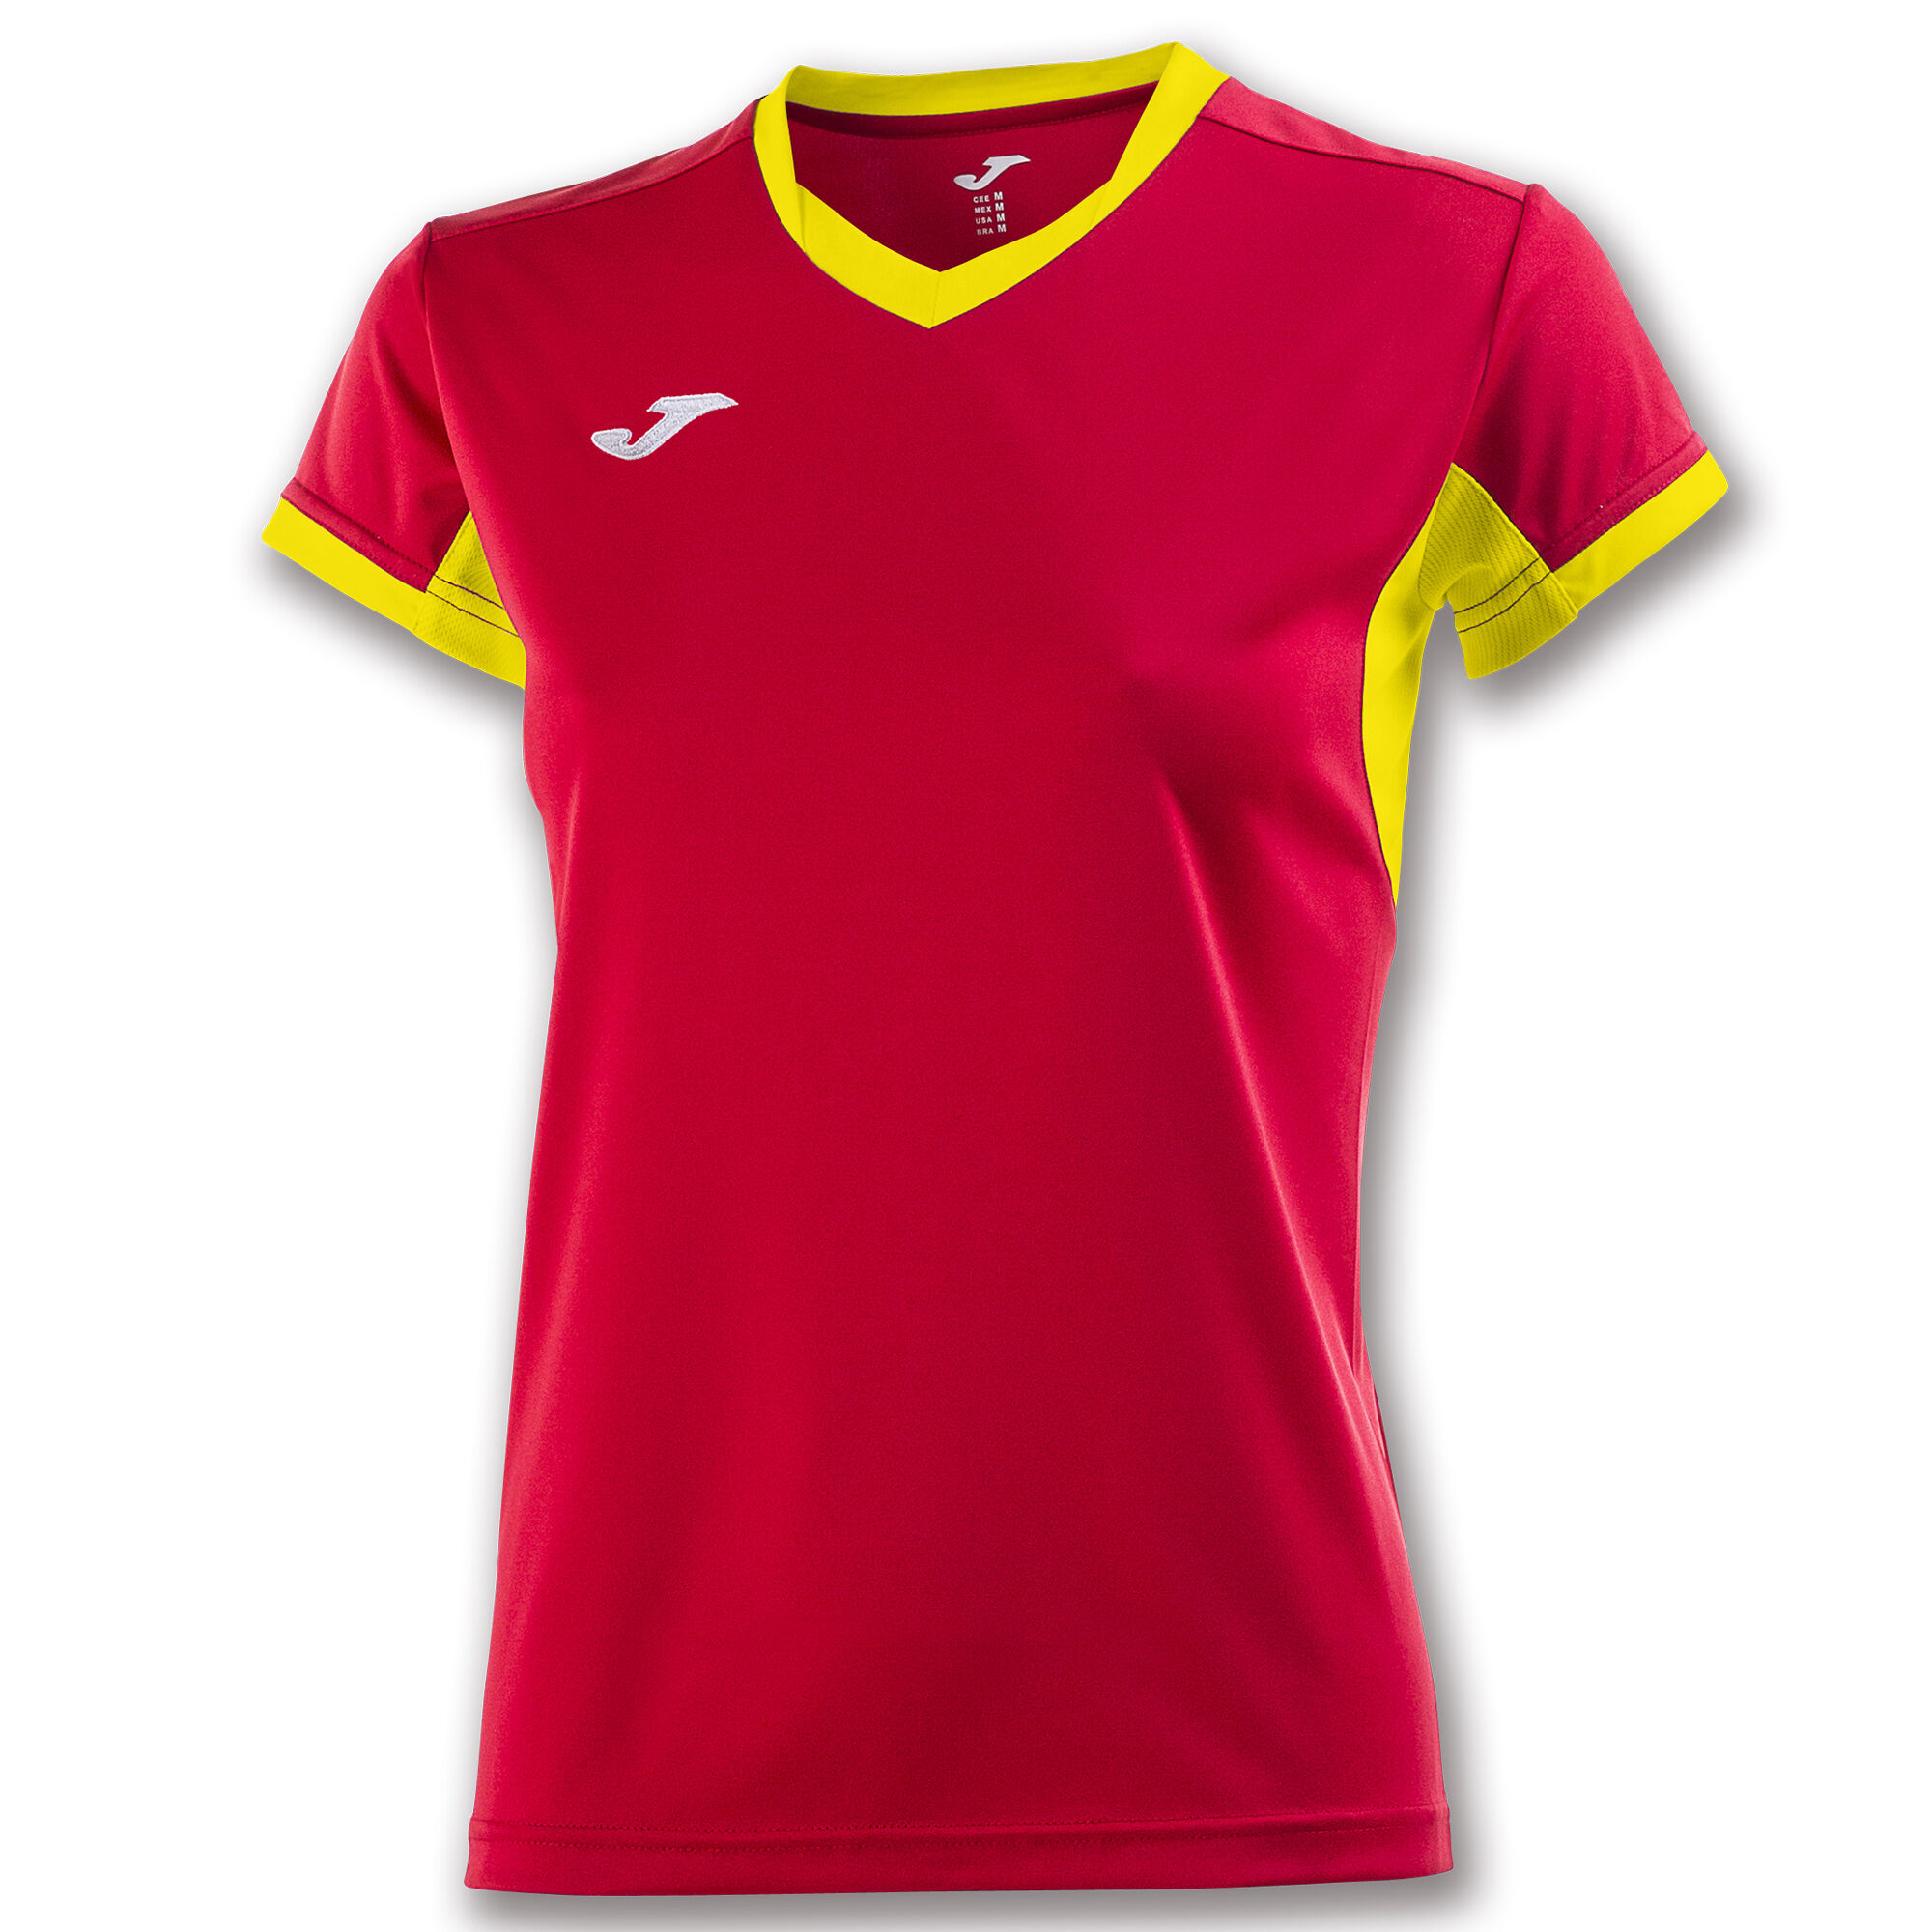 Shirt short woman Championship red yellow |